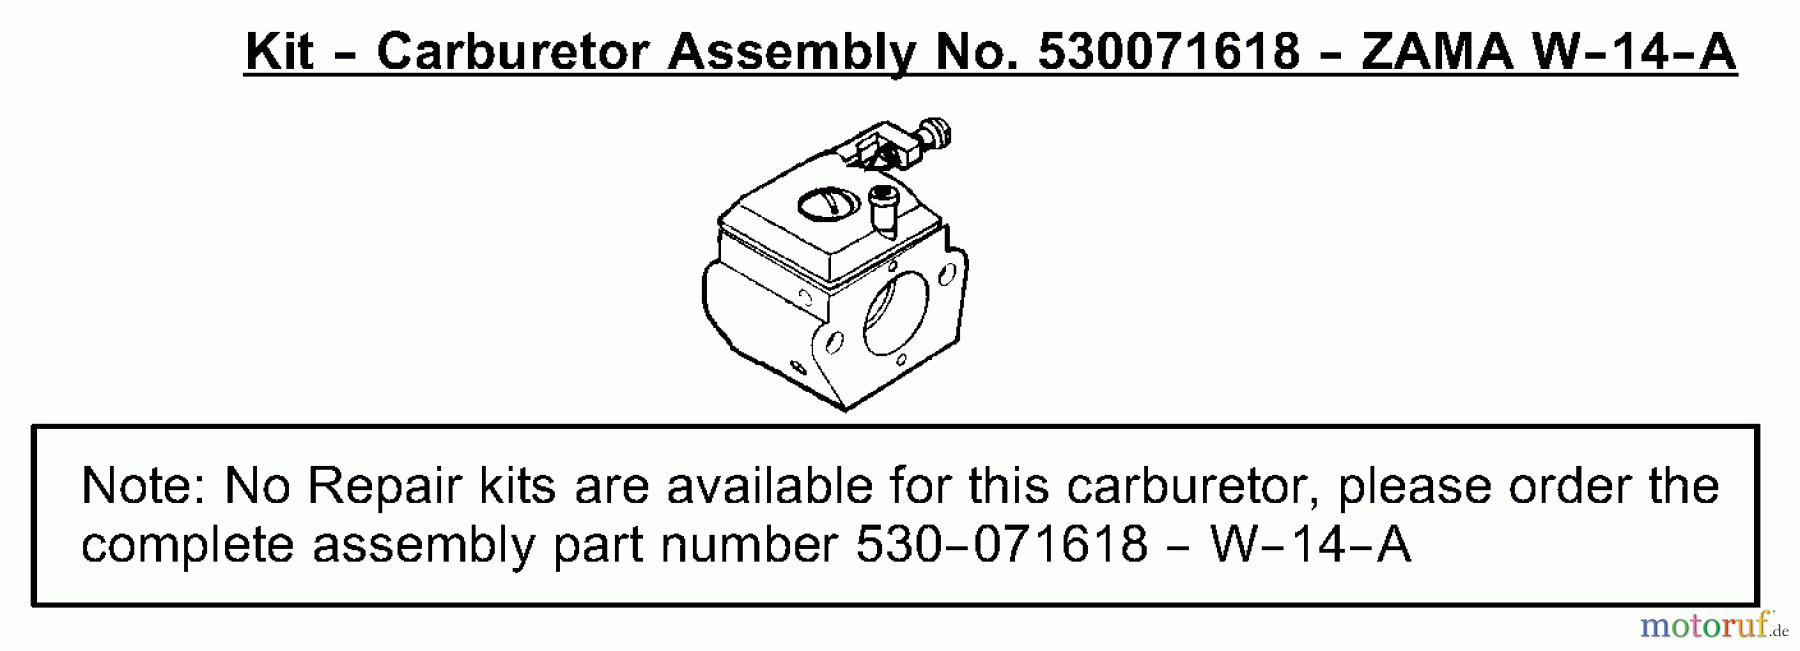  Poulan / Weed Eater Motorsägen 2155 (Type 1) - Poulan Plus Chainsaw Carburetor Assembly (Zama W-14-A) P/N 530071618